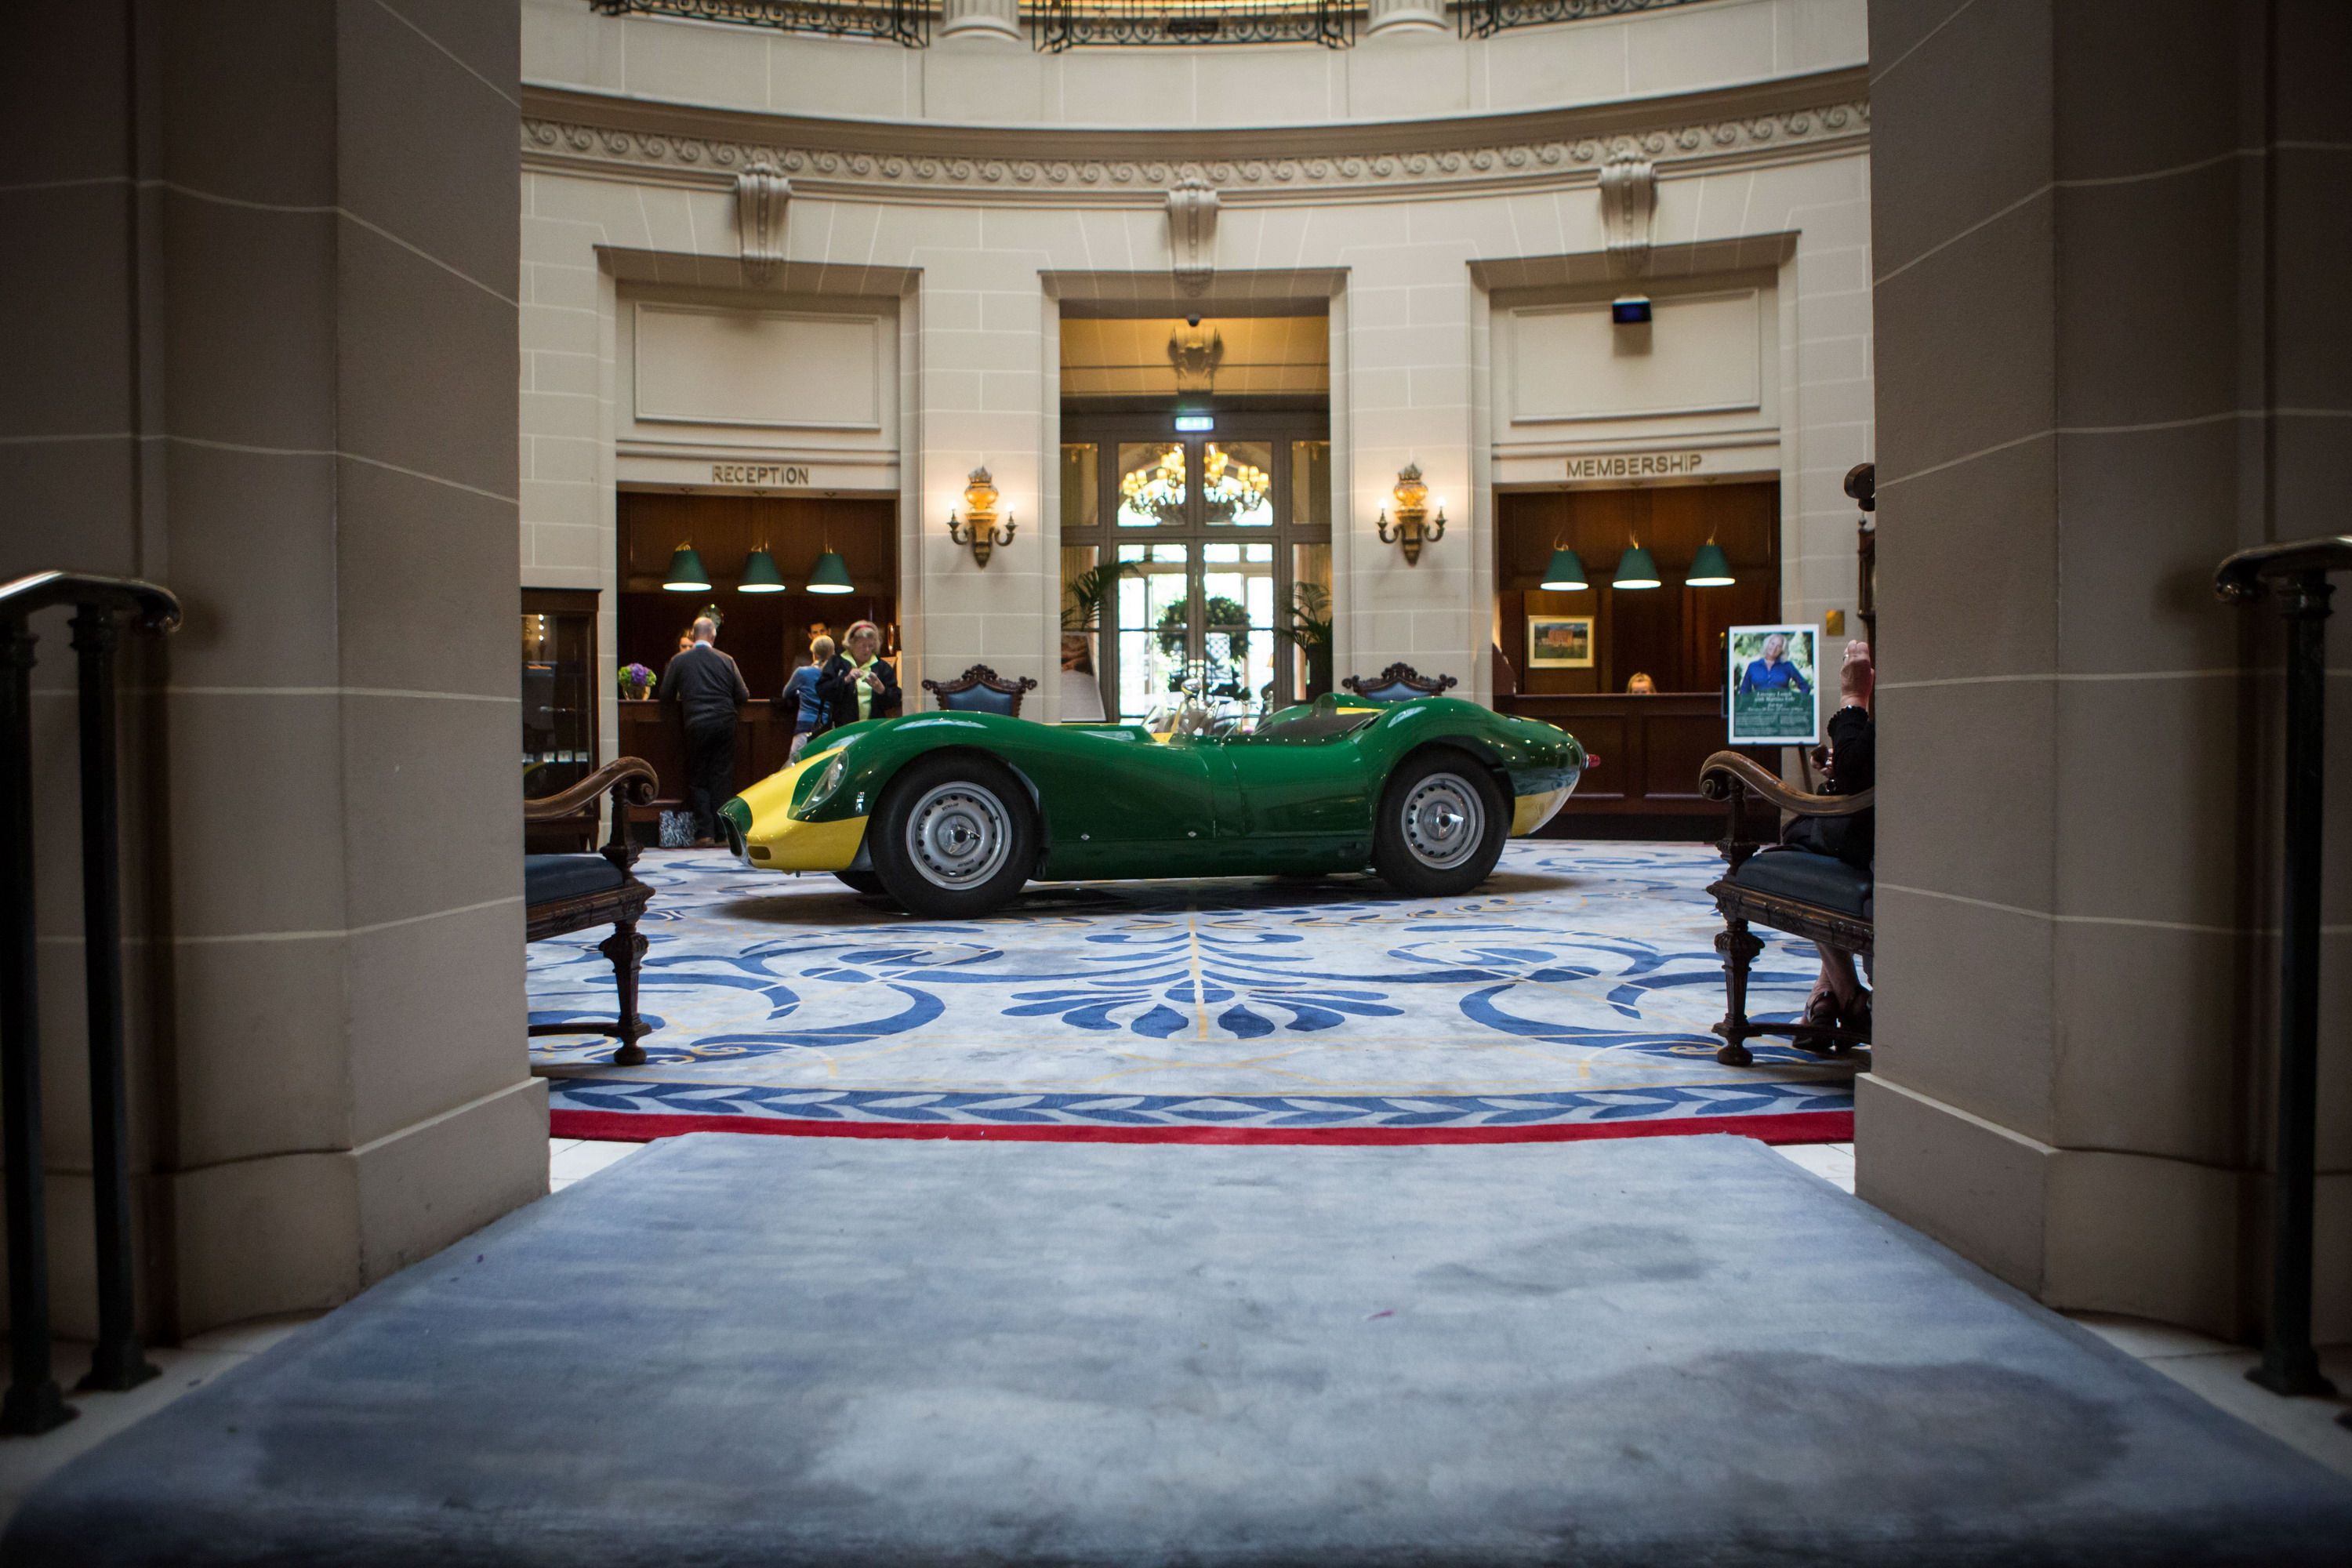 2016 Lister Jaguar Stirling Moss Edition Prototype